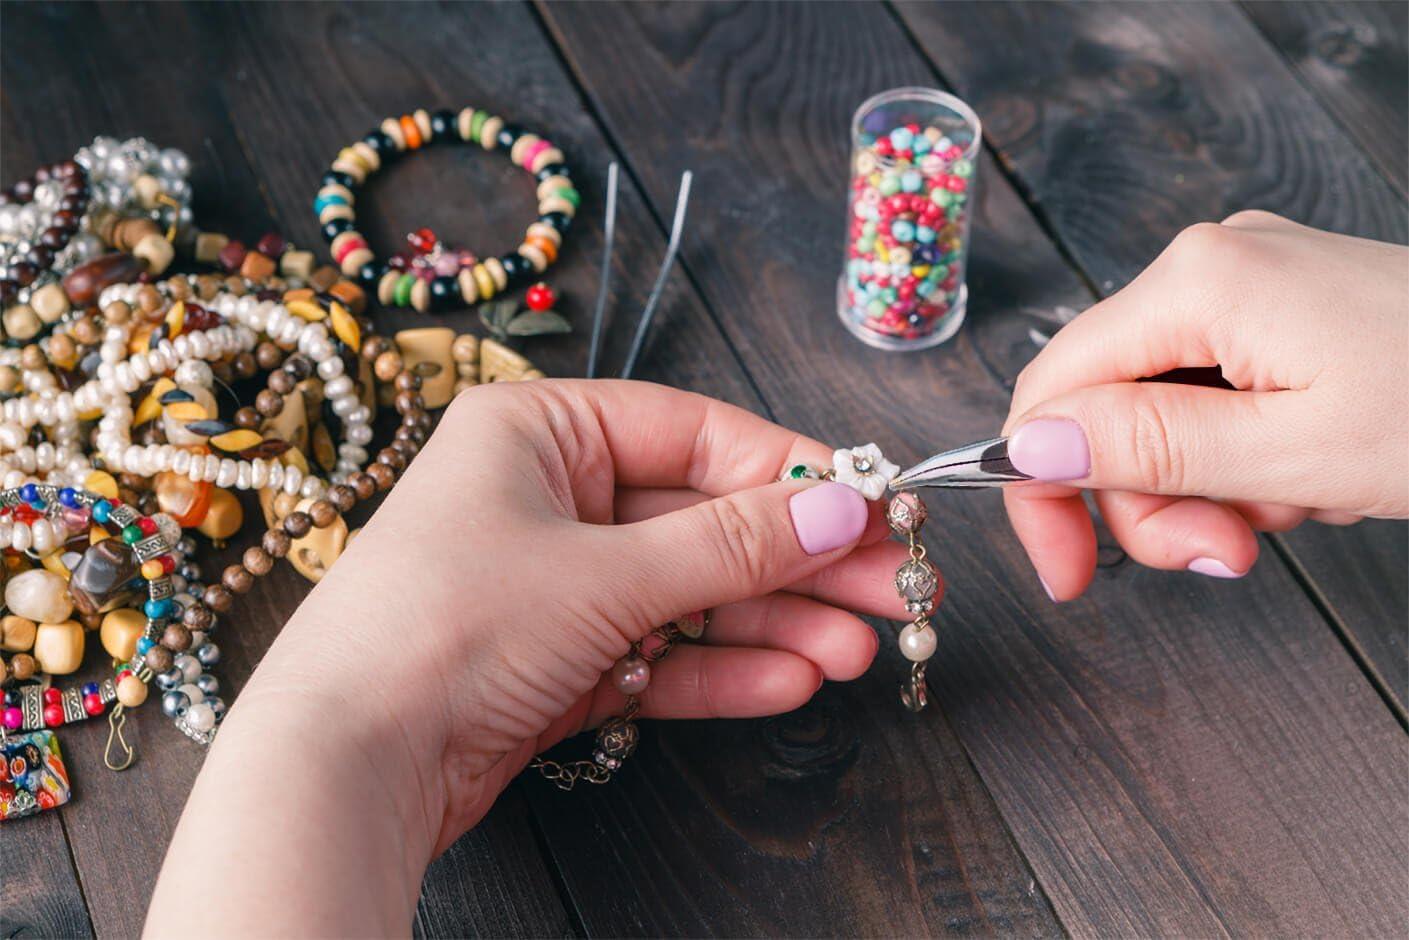  anezus Jewelry Making Tools Kit, Jewelry Making